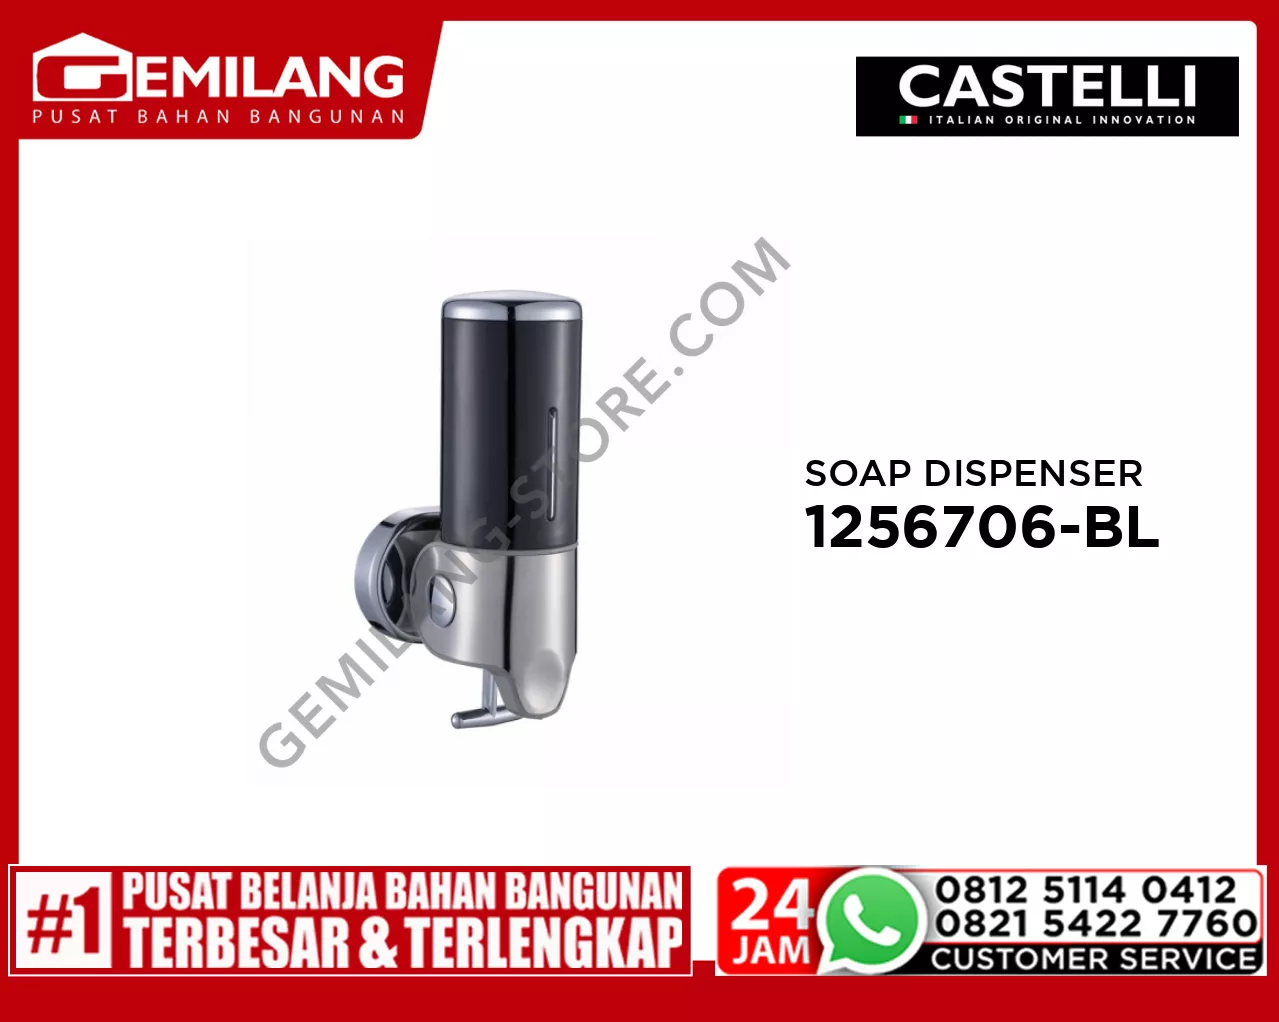 CASTELLI SINGLE SOAP DISPENSER BLACK 1256706-BL